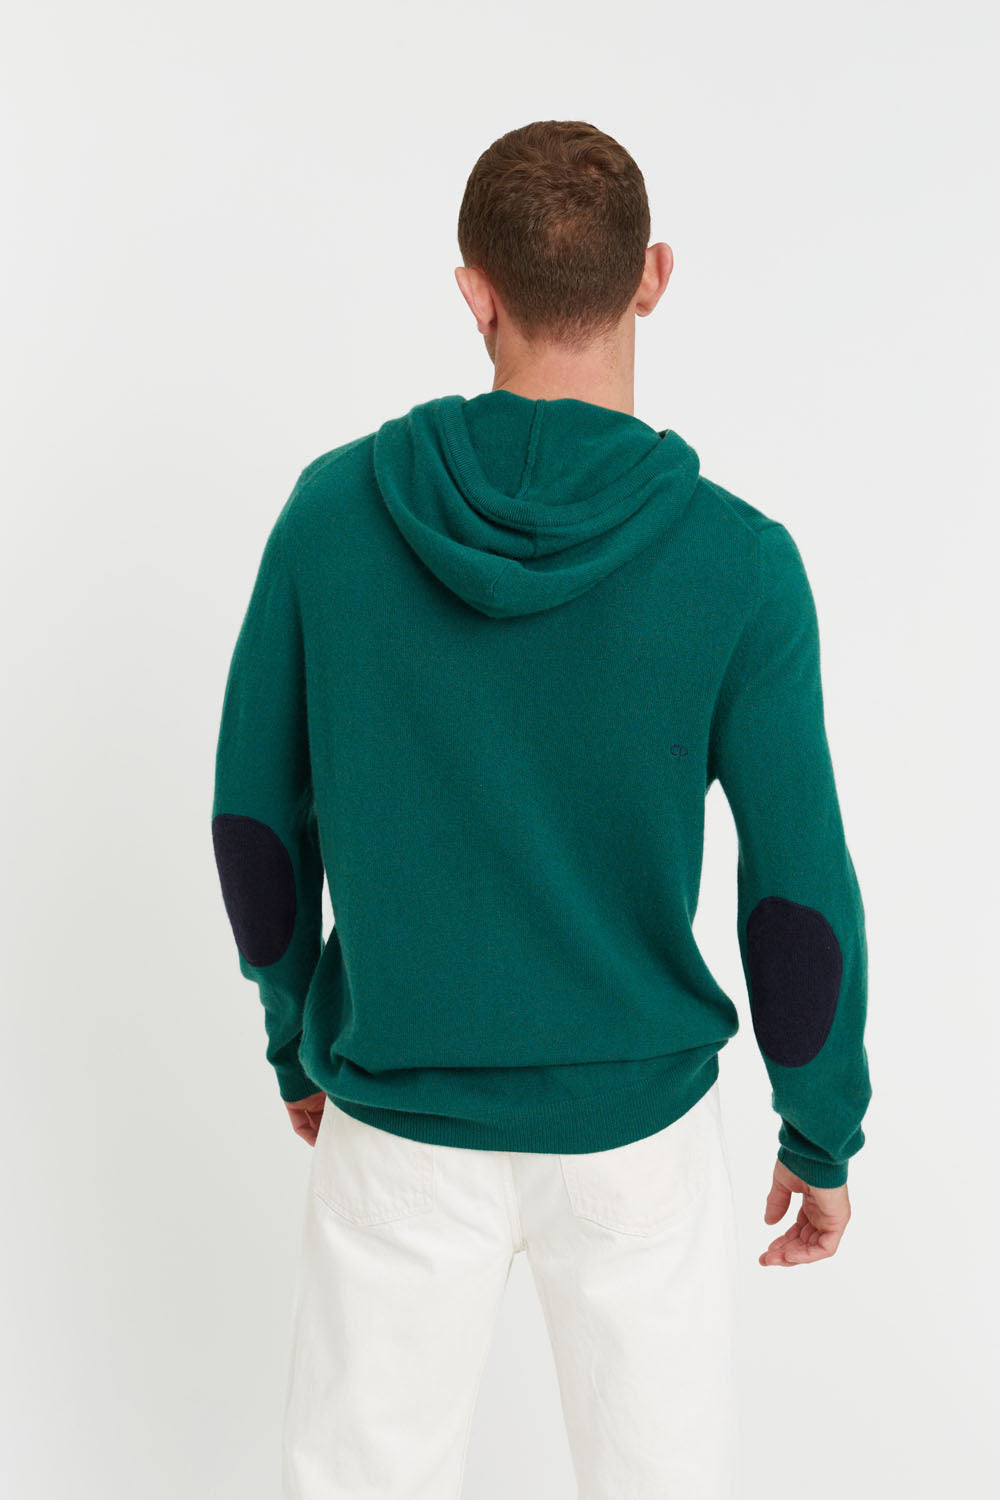 R. Options Fine Weight Zip Neck Elbow Patch Sweater for Men in Grey He –  Johnson's Hub Kewanee